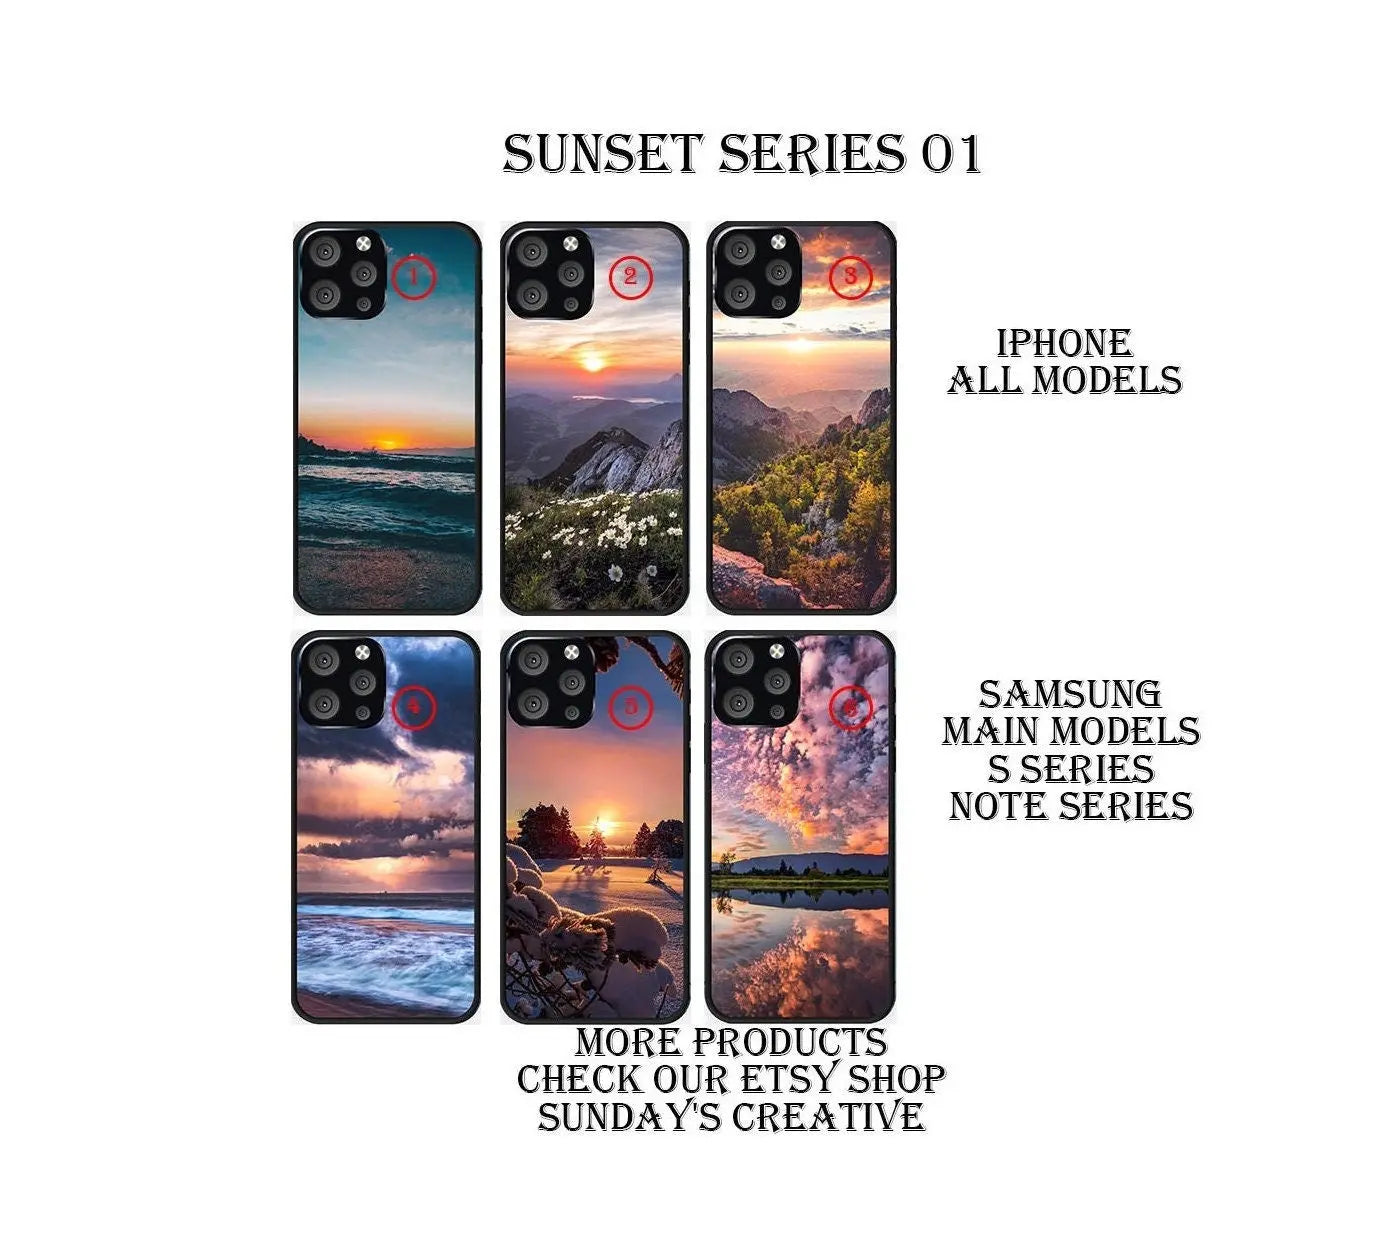 Designed phone cases Sunset series 01 Sunday's Creative